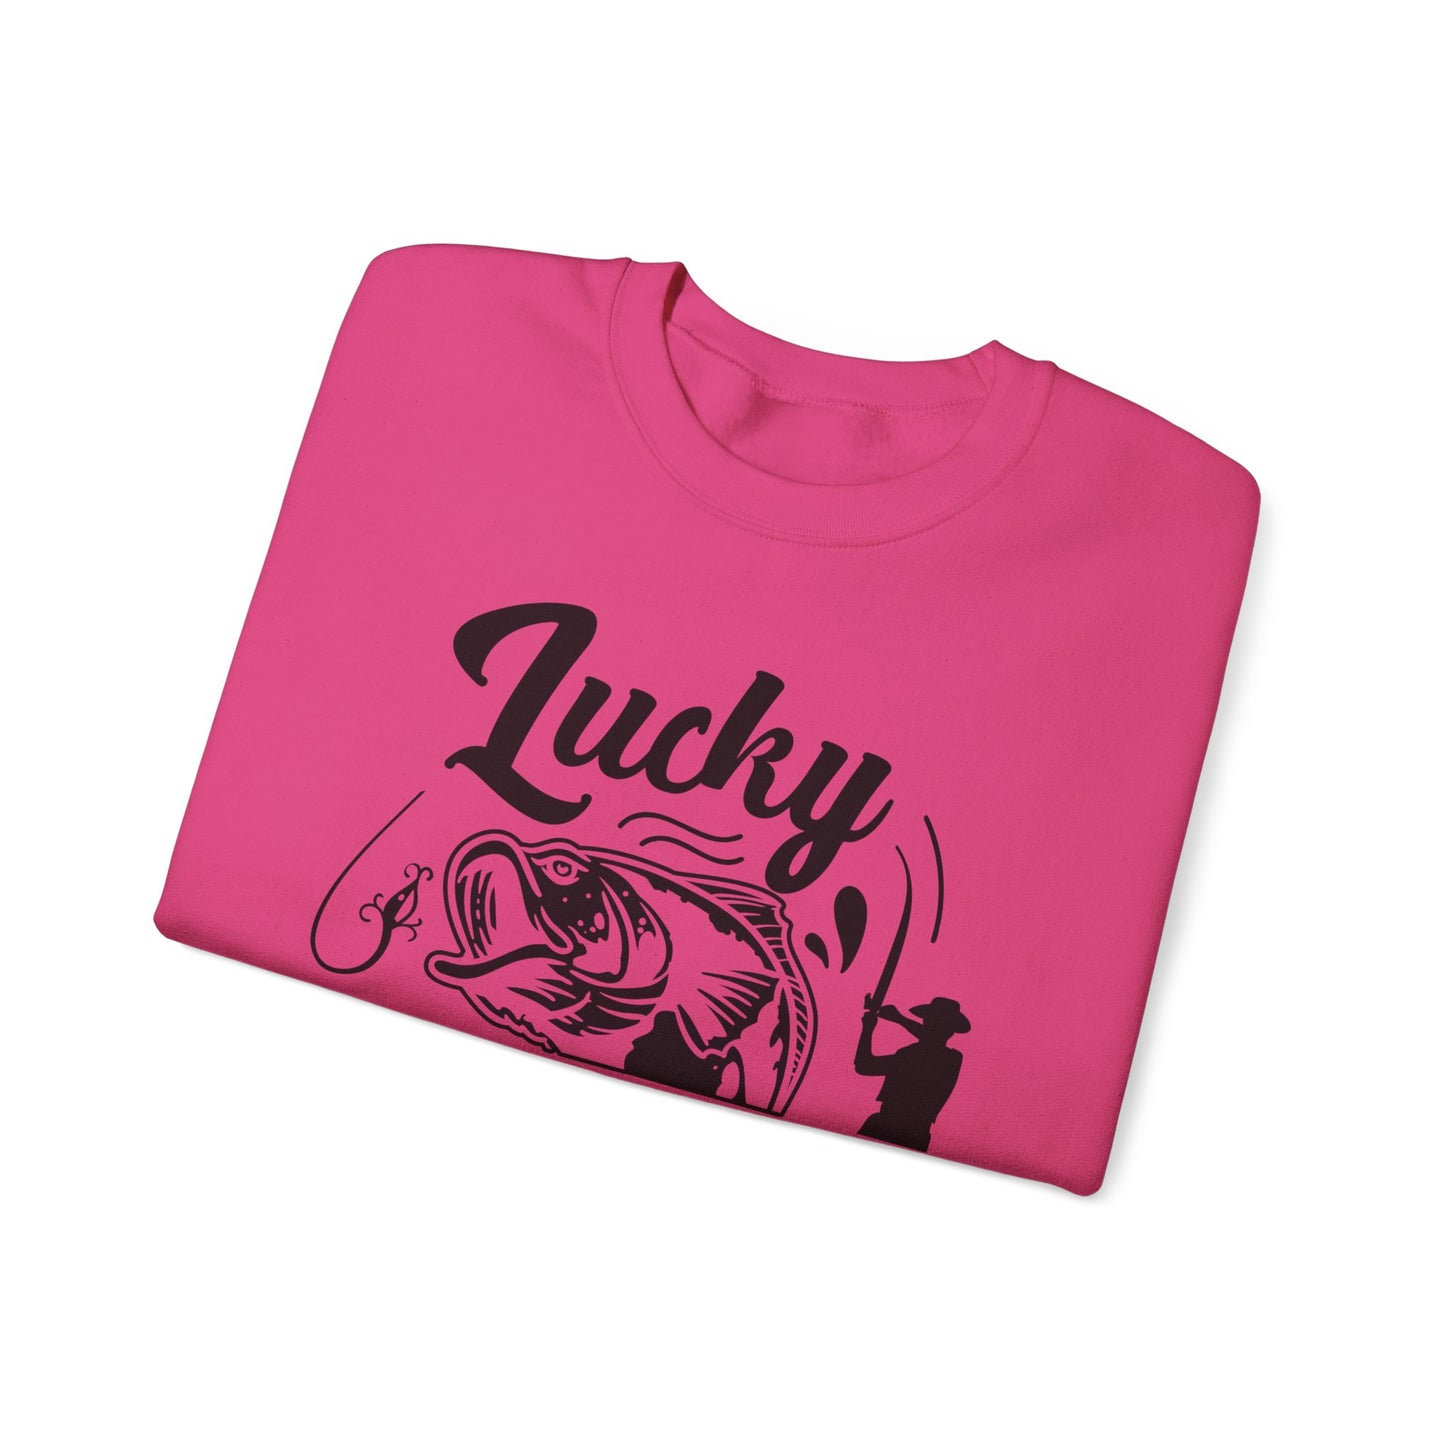 Lucky Fishing Shirt don't wash - Unisex Heavy Blend™ Crewneck Sweatshirt